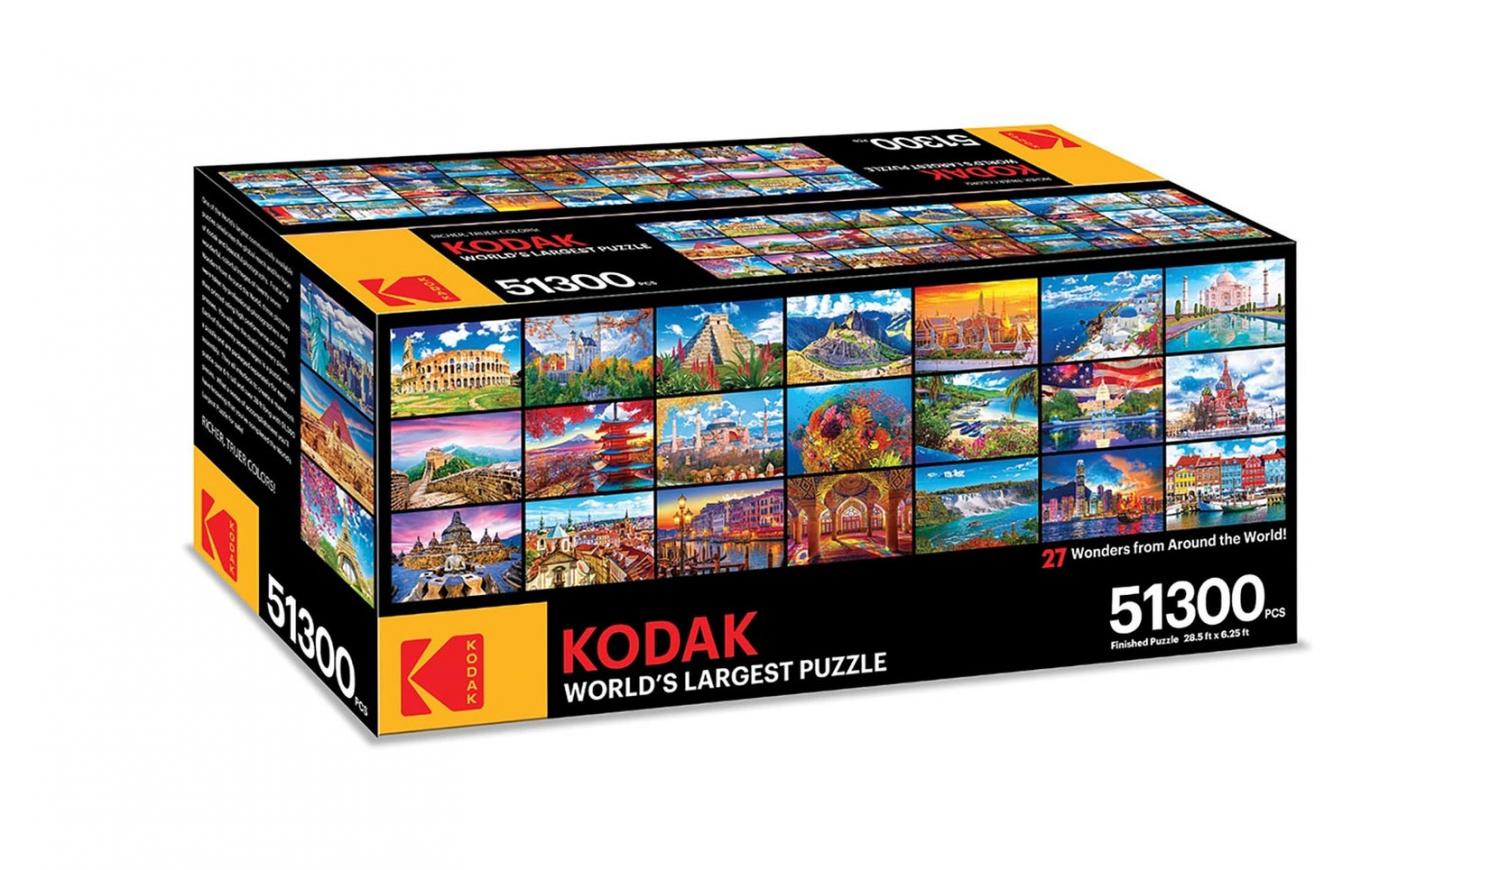 Kodak World's Largest Jigsaw Puzzle - Massive 51,300 piece jigsaw puzzle